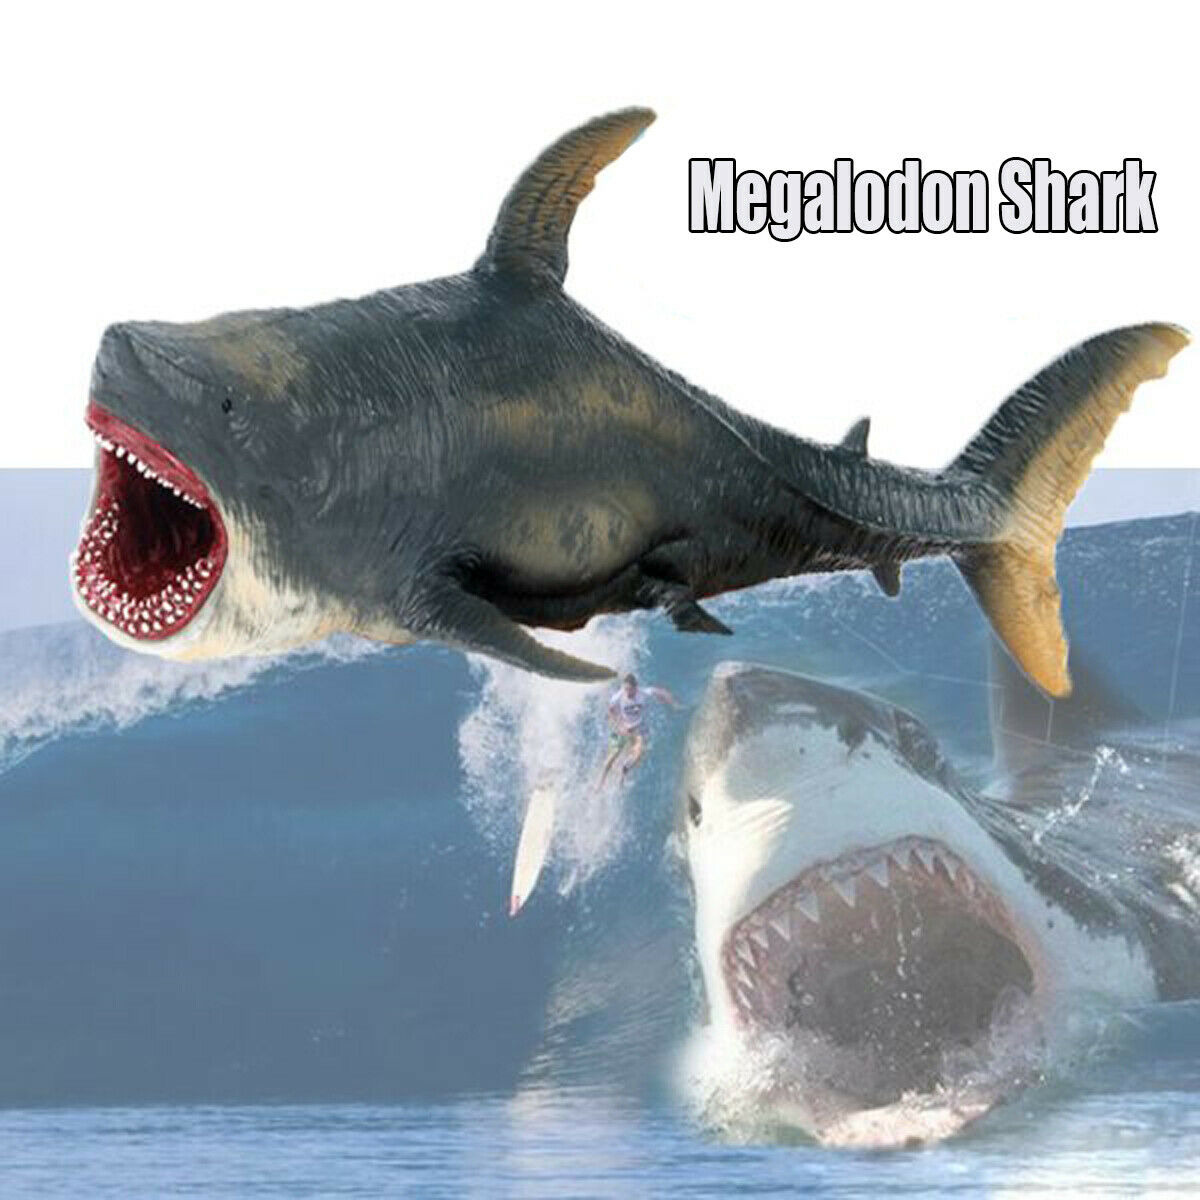 Shark Megalodon Toy Toy Realistic Ocean Monster Model Sculpture Craft Gift Decor